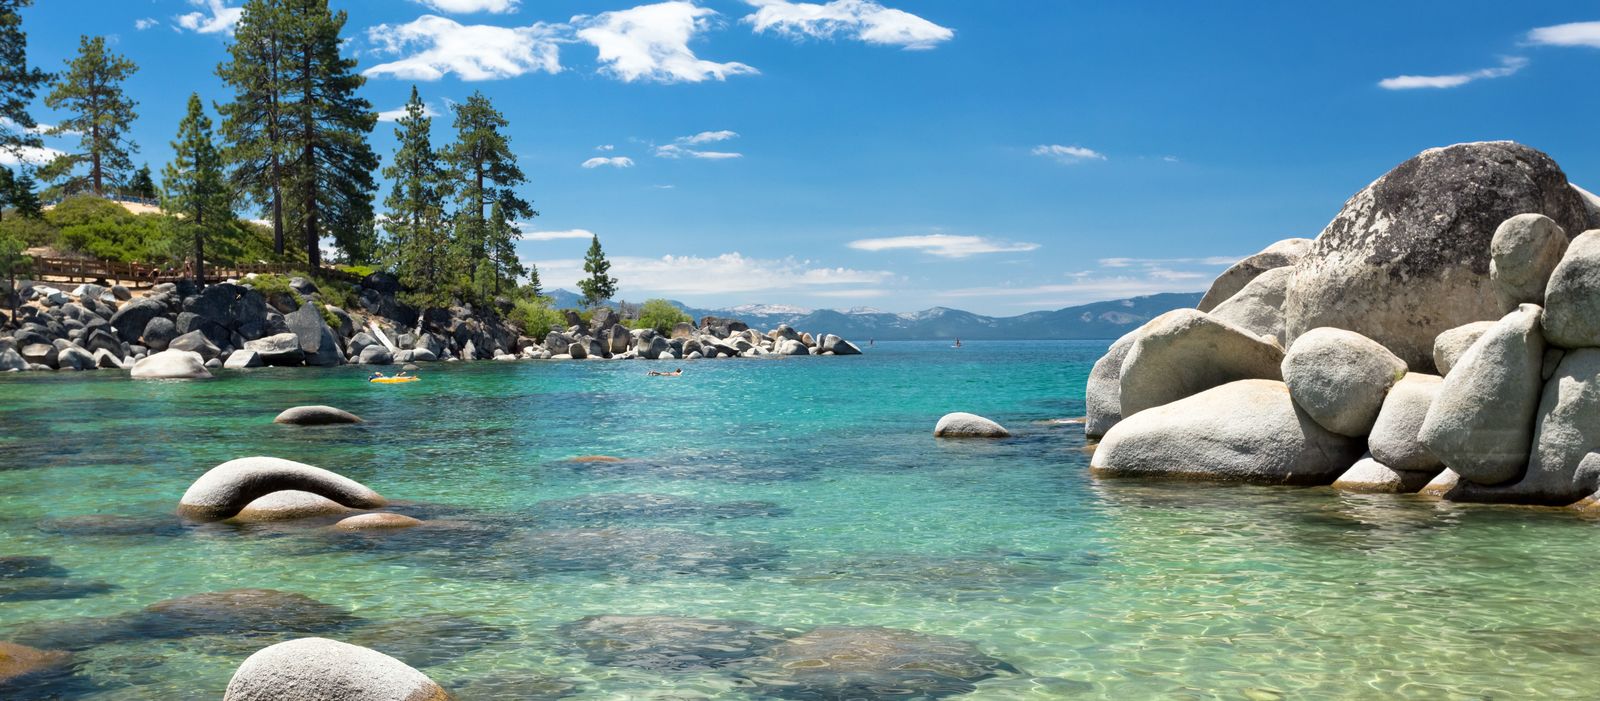 der Lake Tahoe in Nevada